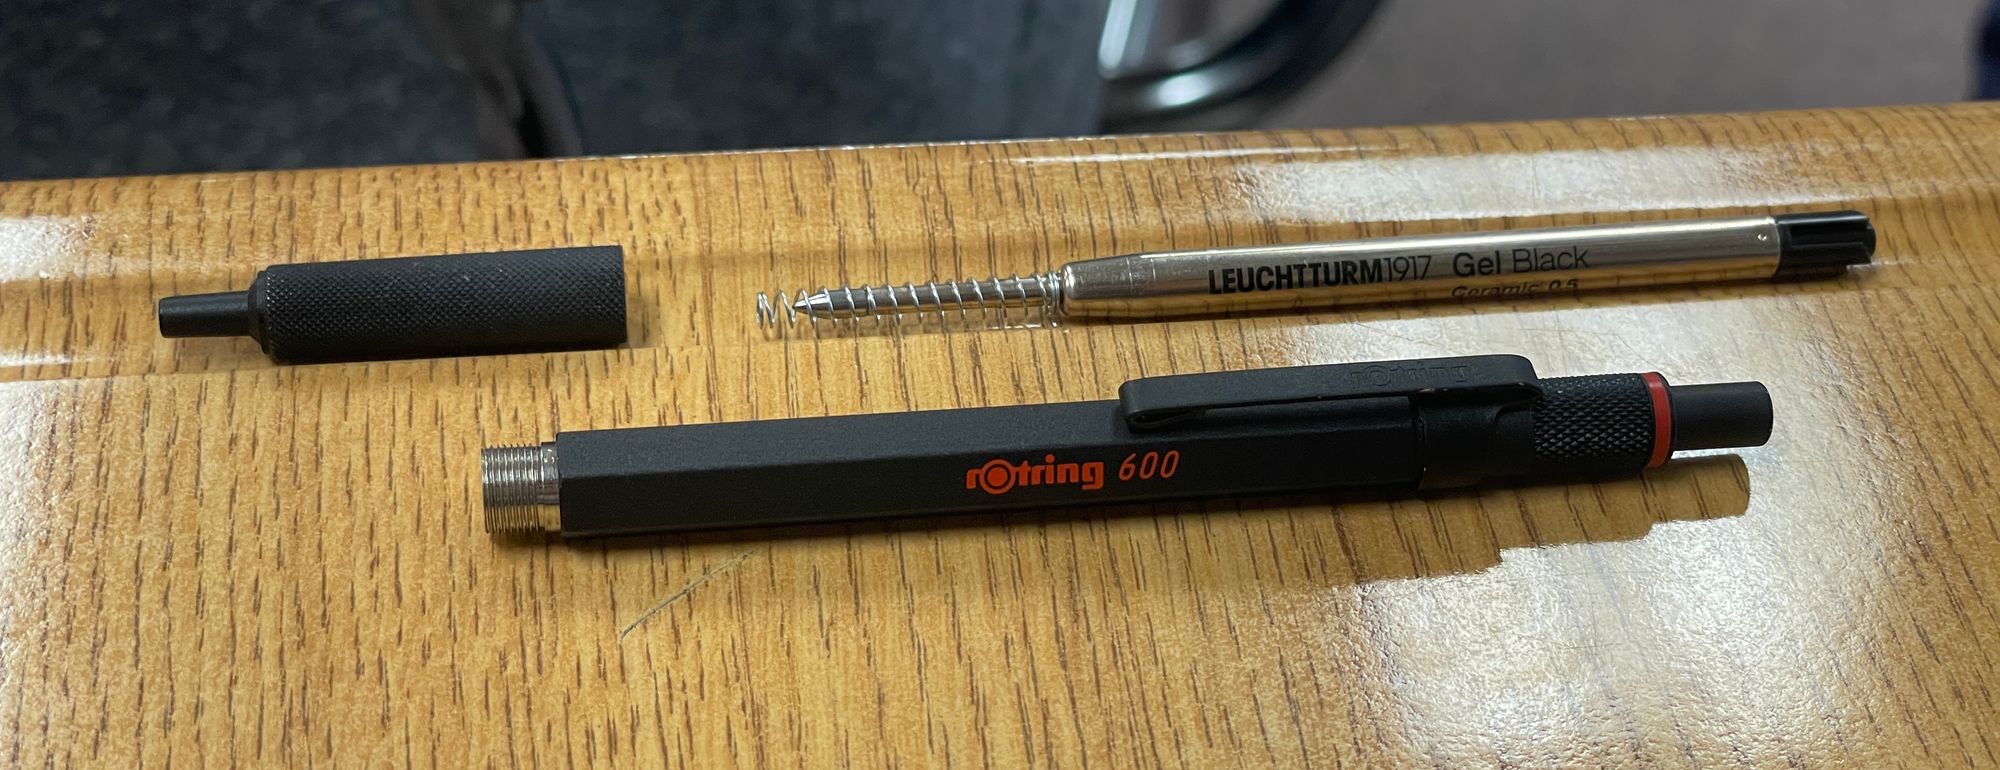 Rotring 600 ballpoint pen review 